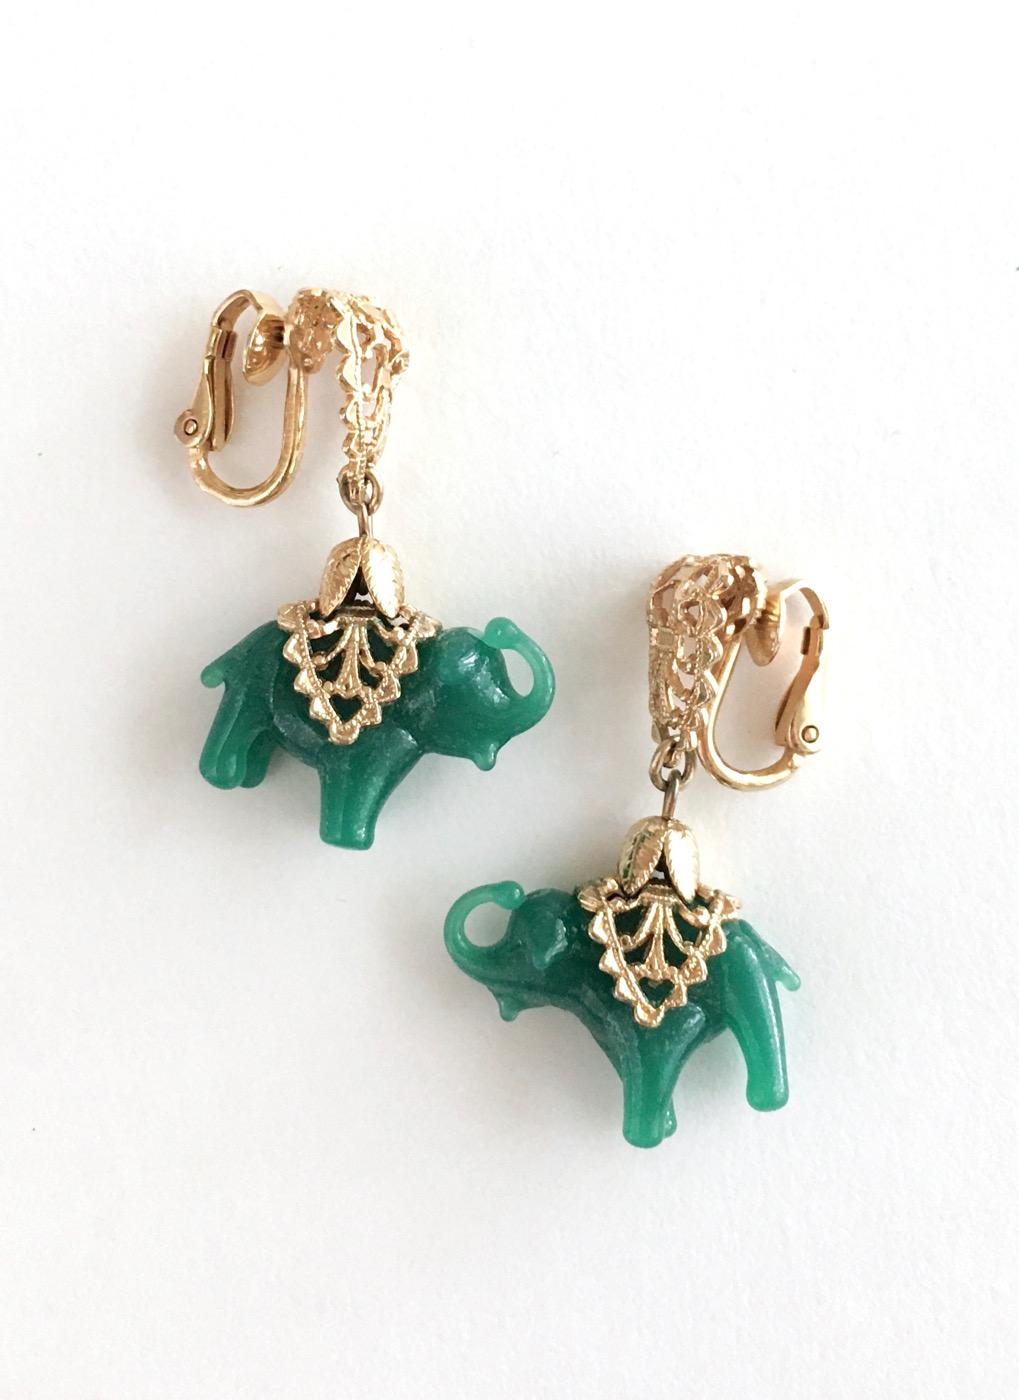 1960s-Napier-green-glass-elephant-earrings - 6